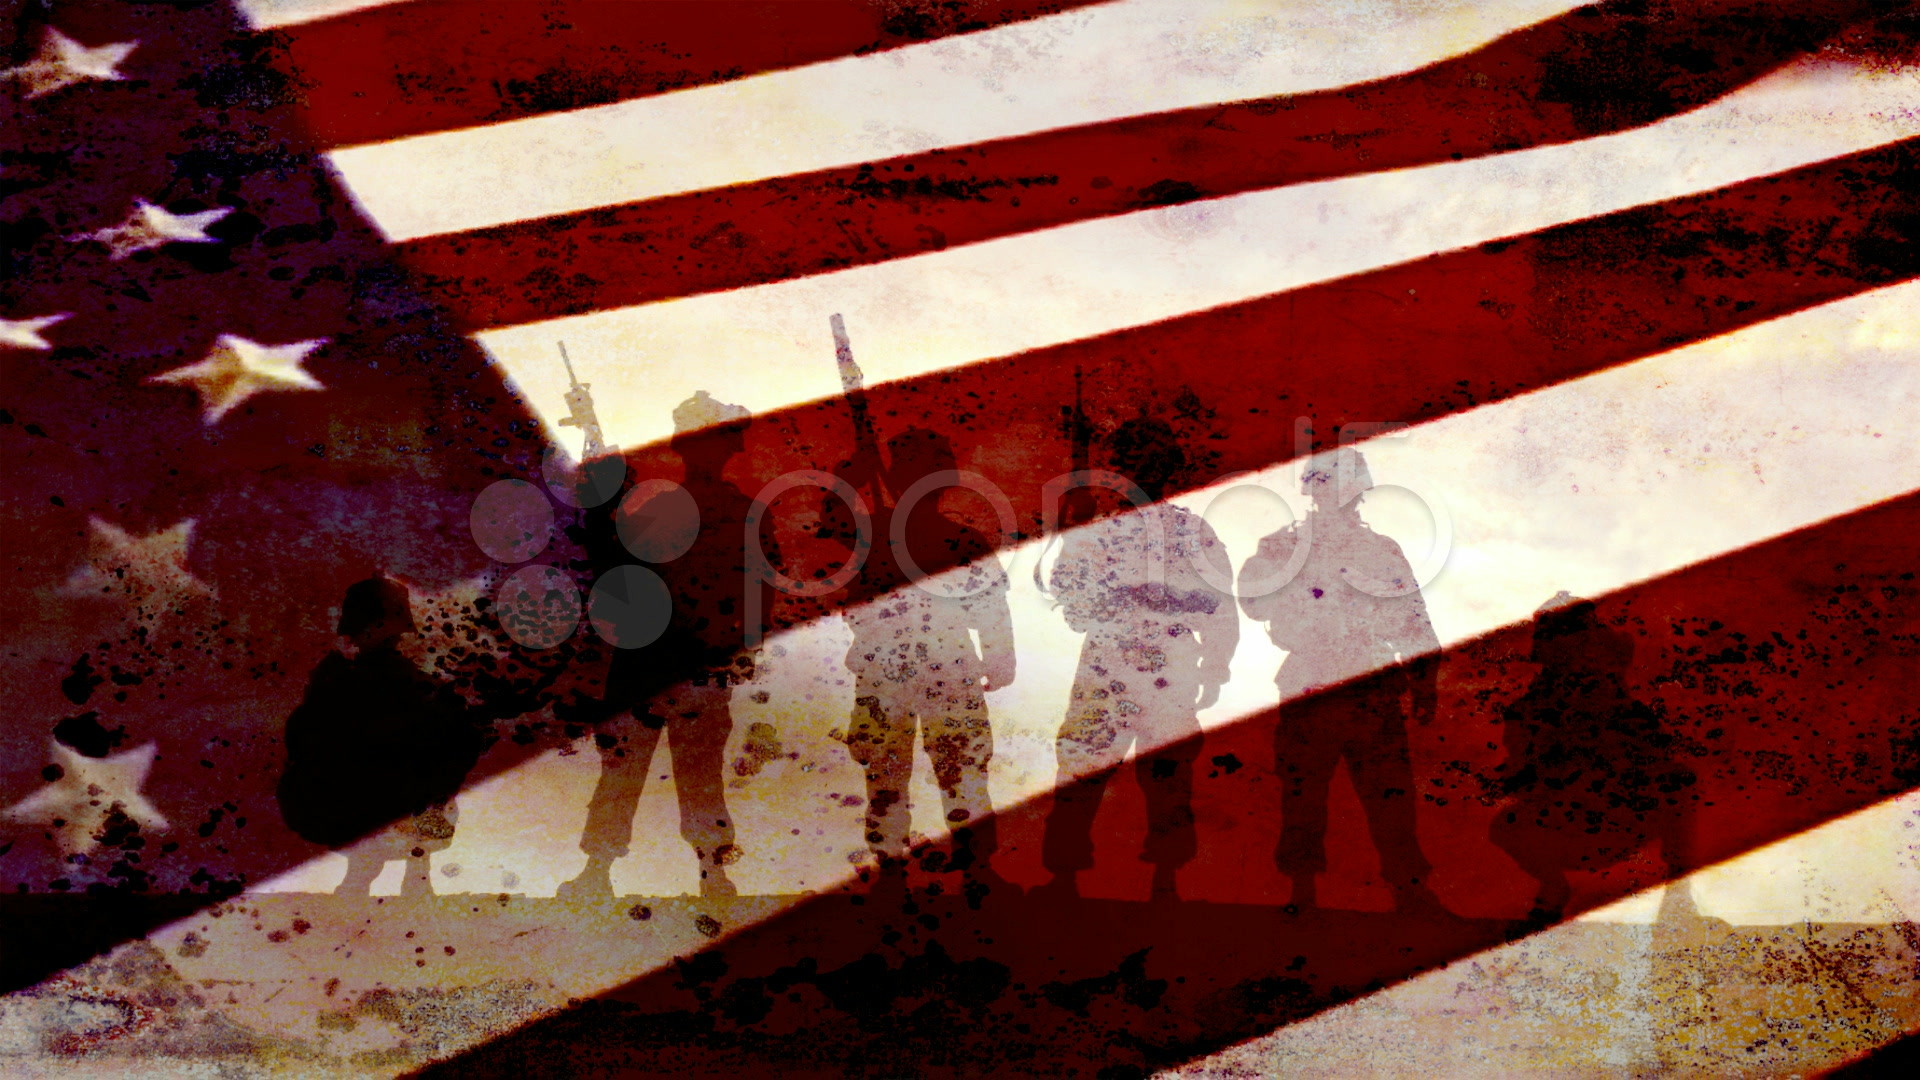 1920x1080 Free Wallpaper Patriotic Backgrounds - WallpaperSafari patriotic eagle  backgrounds - Bing images | Patriotic / 9/11 .